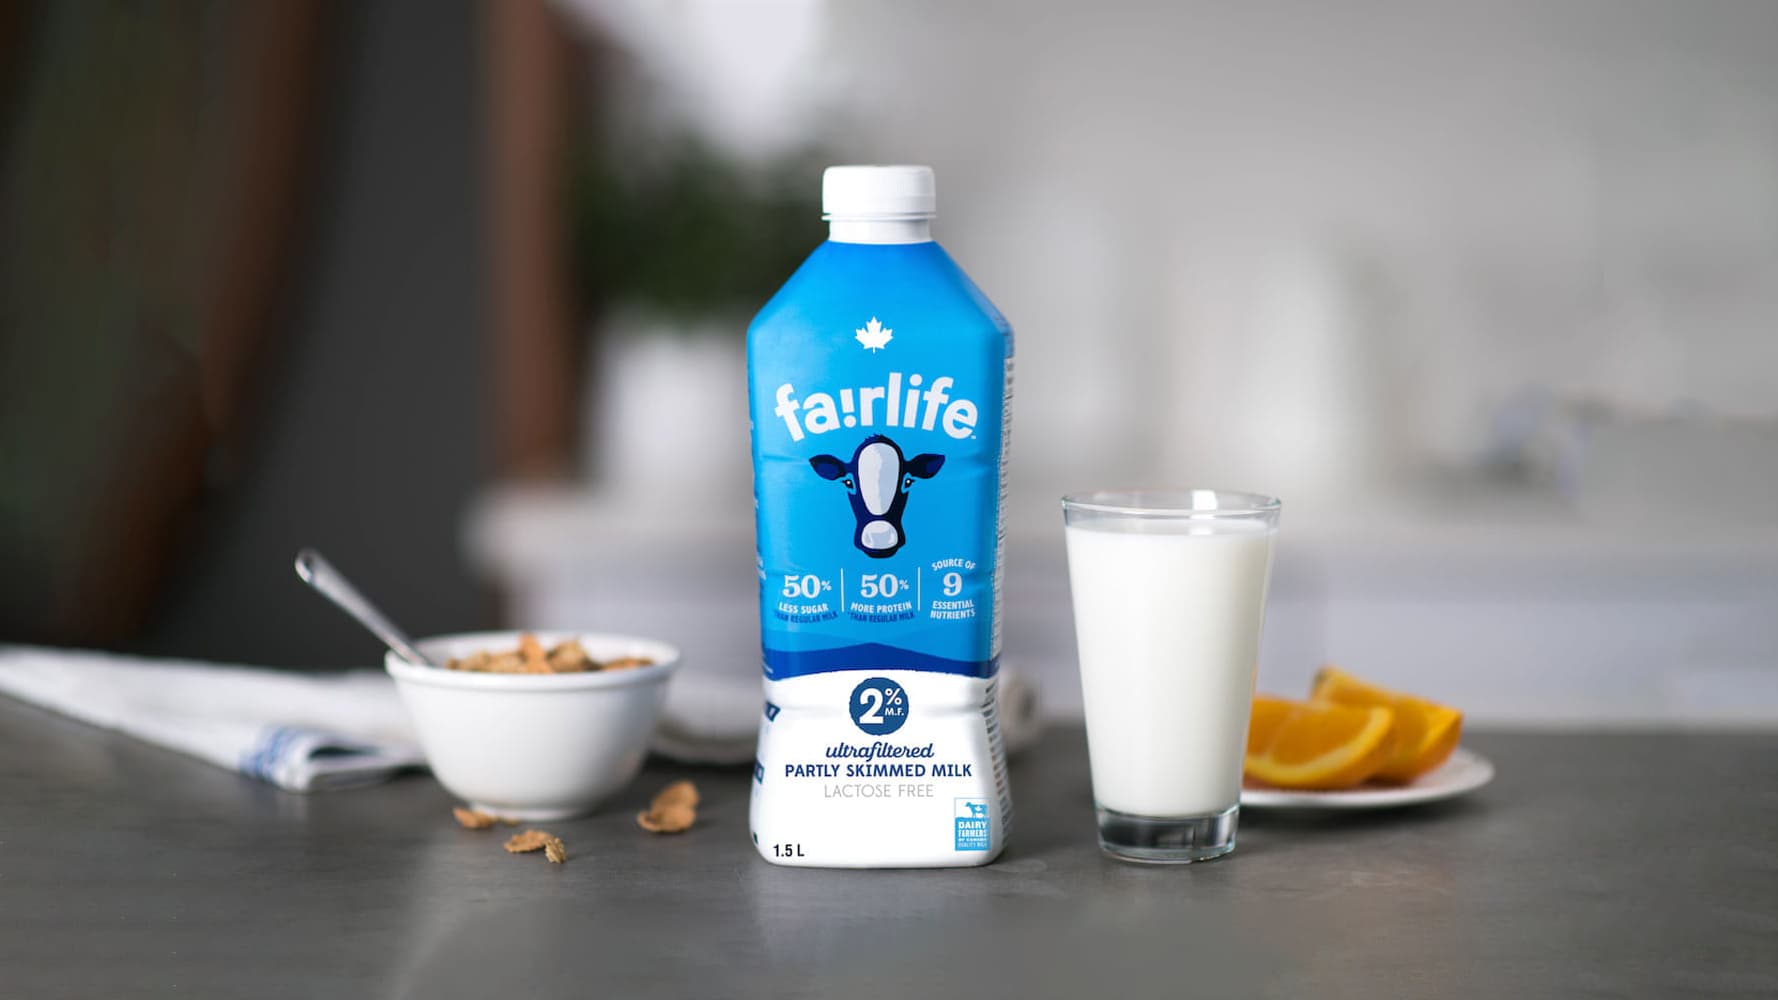 fairlife 2 % ultrafiltered partly skimmed milk 1.5 L bottle